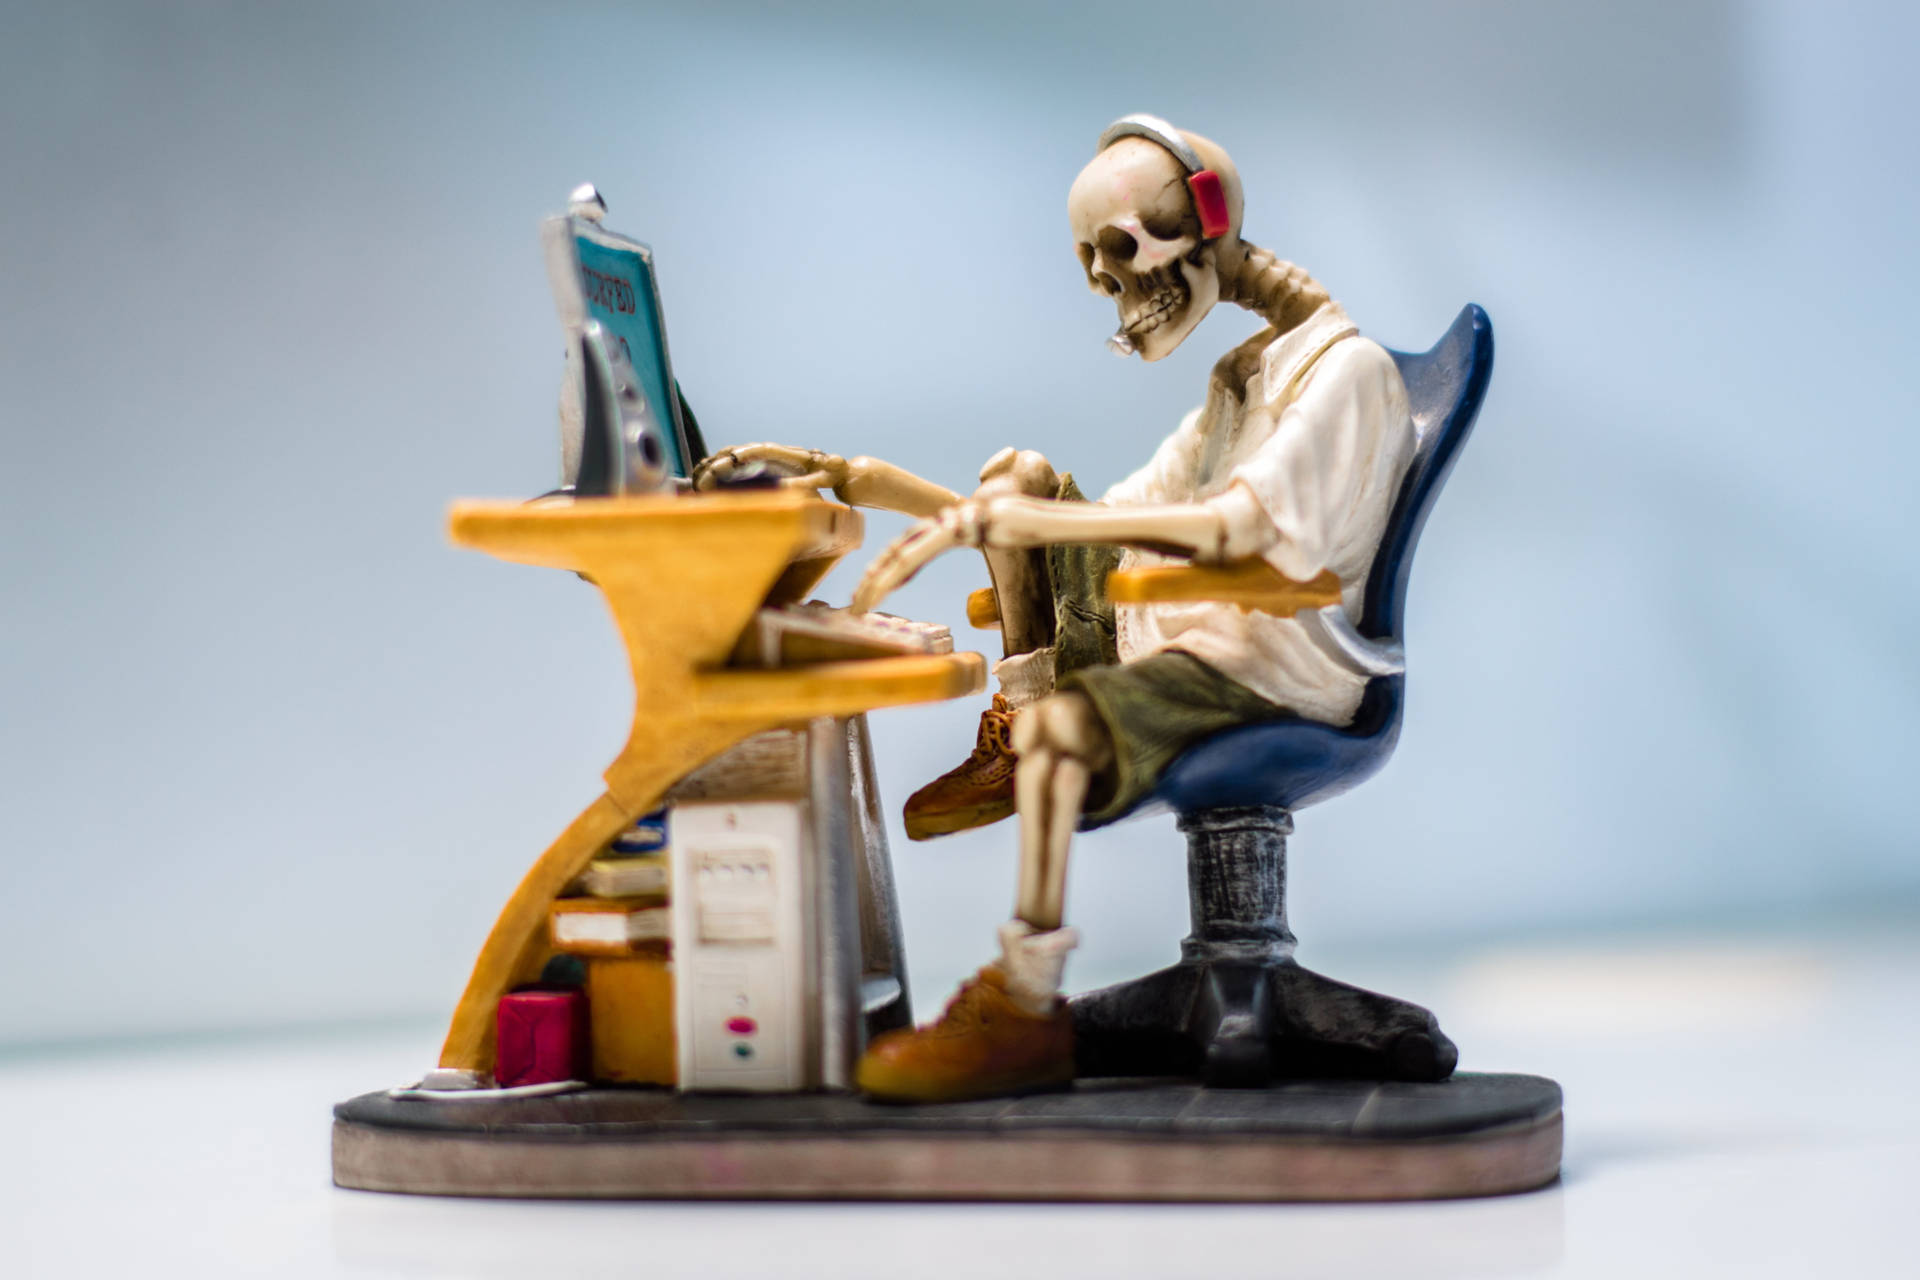 Arbeitsendermenschlicher Skelett-desktop Wallpaper